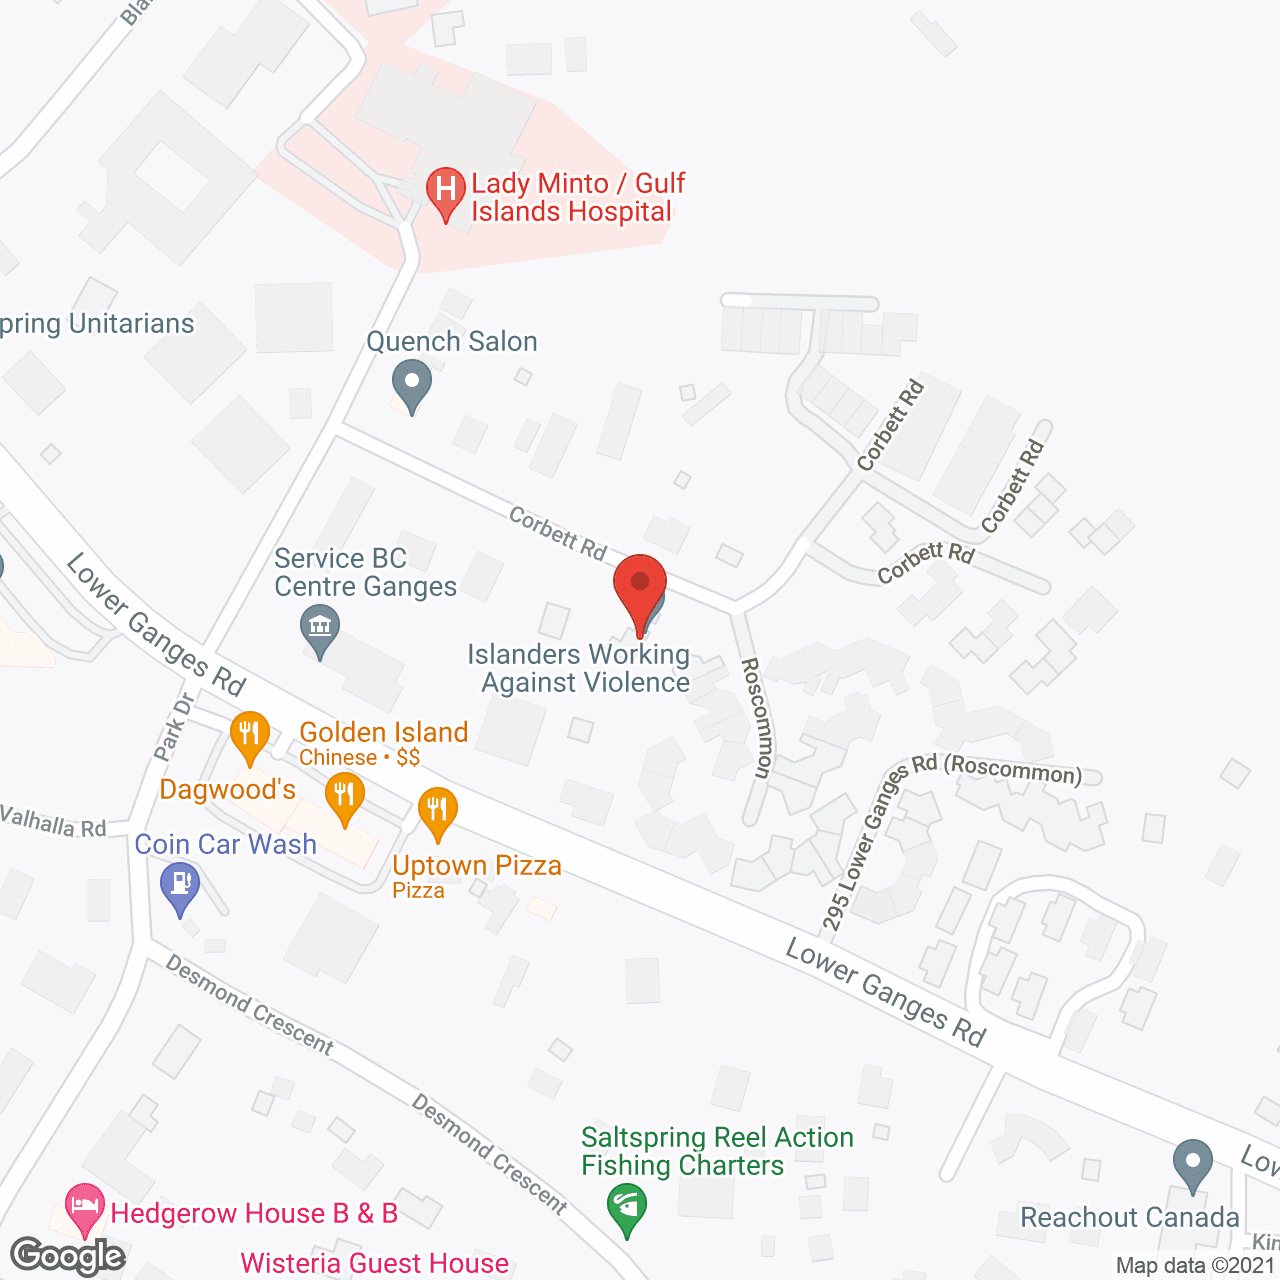 Croftonbrook in google map